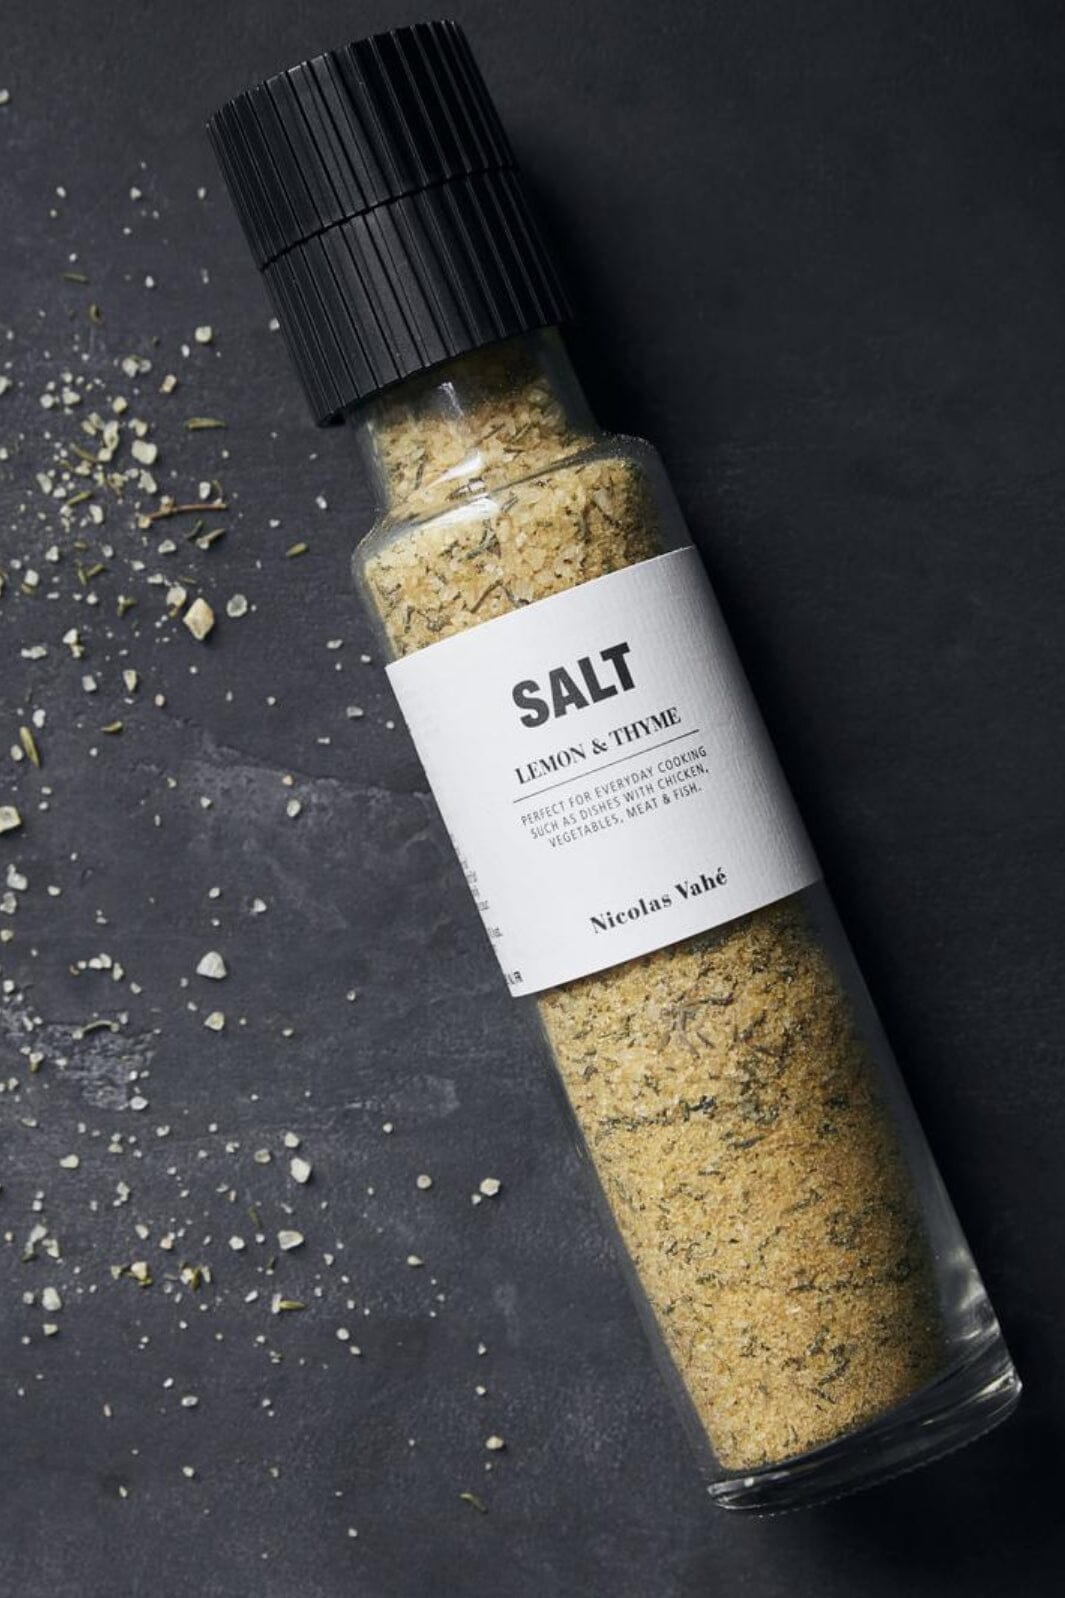 Nicolas Vahe - Salt, Lemon & Thyme Salt 